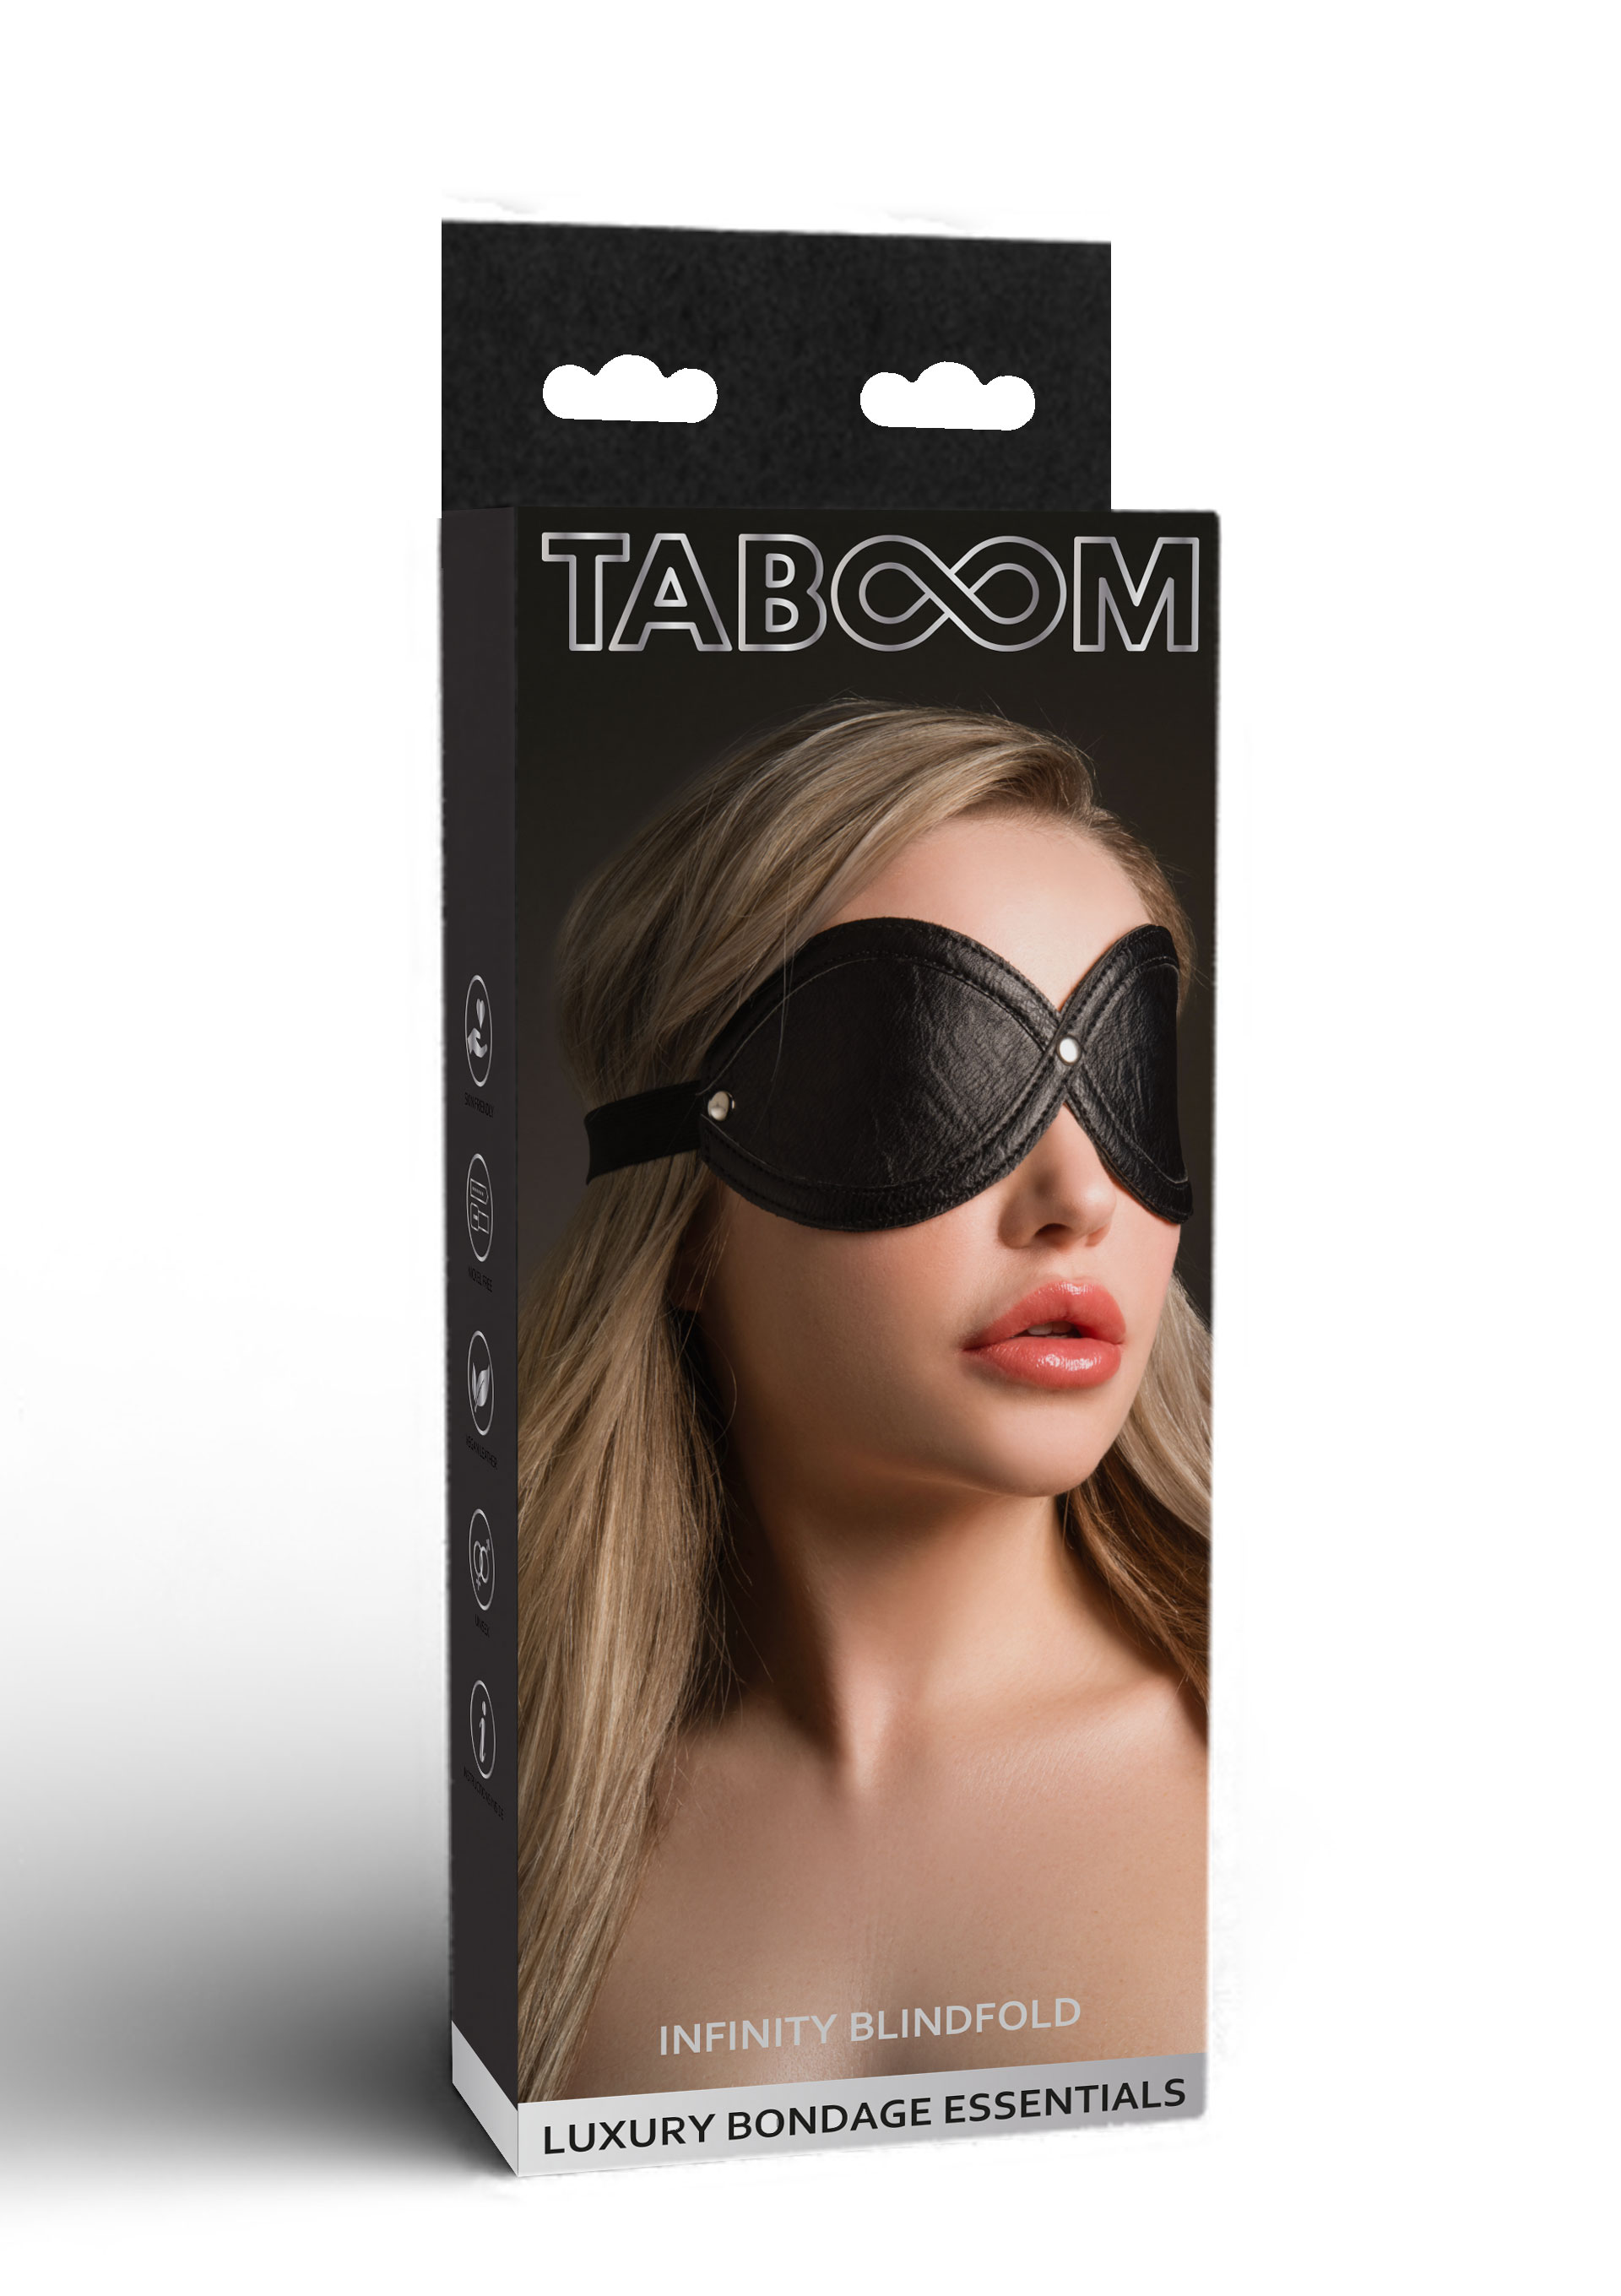 Taboom - Taboom Infinity Blindfold